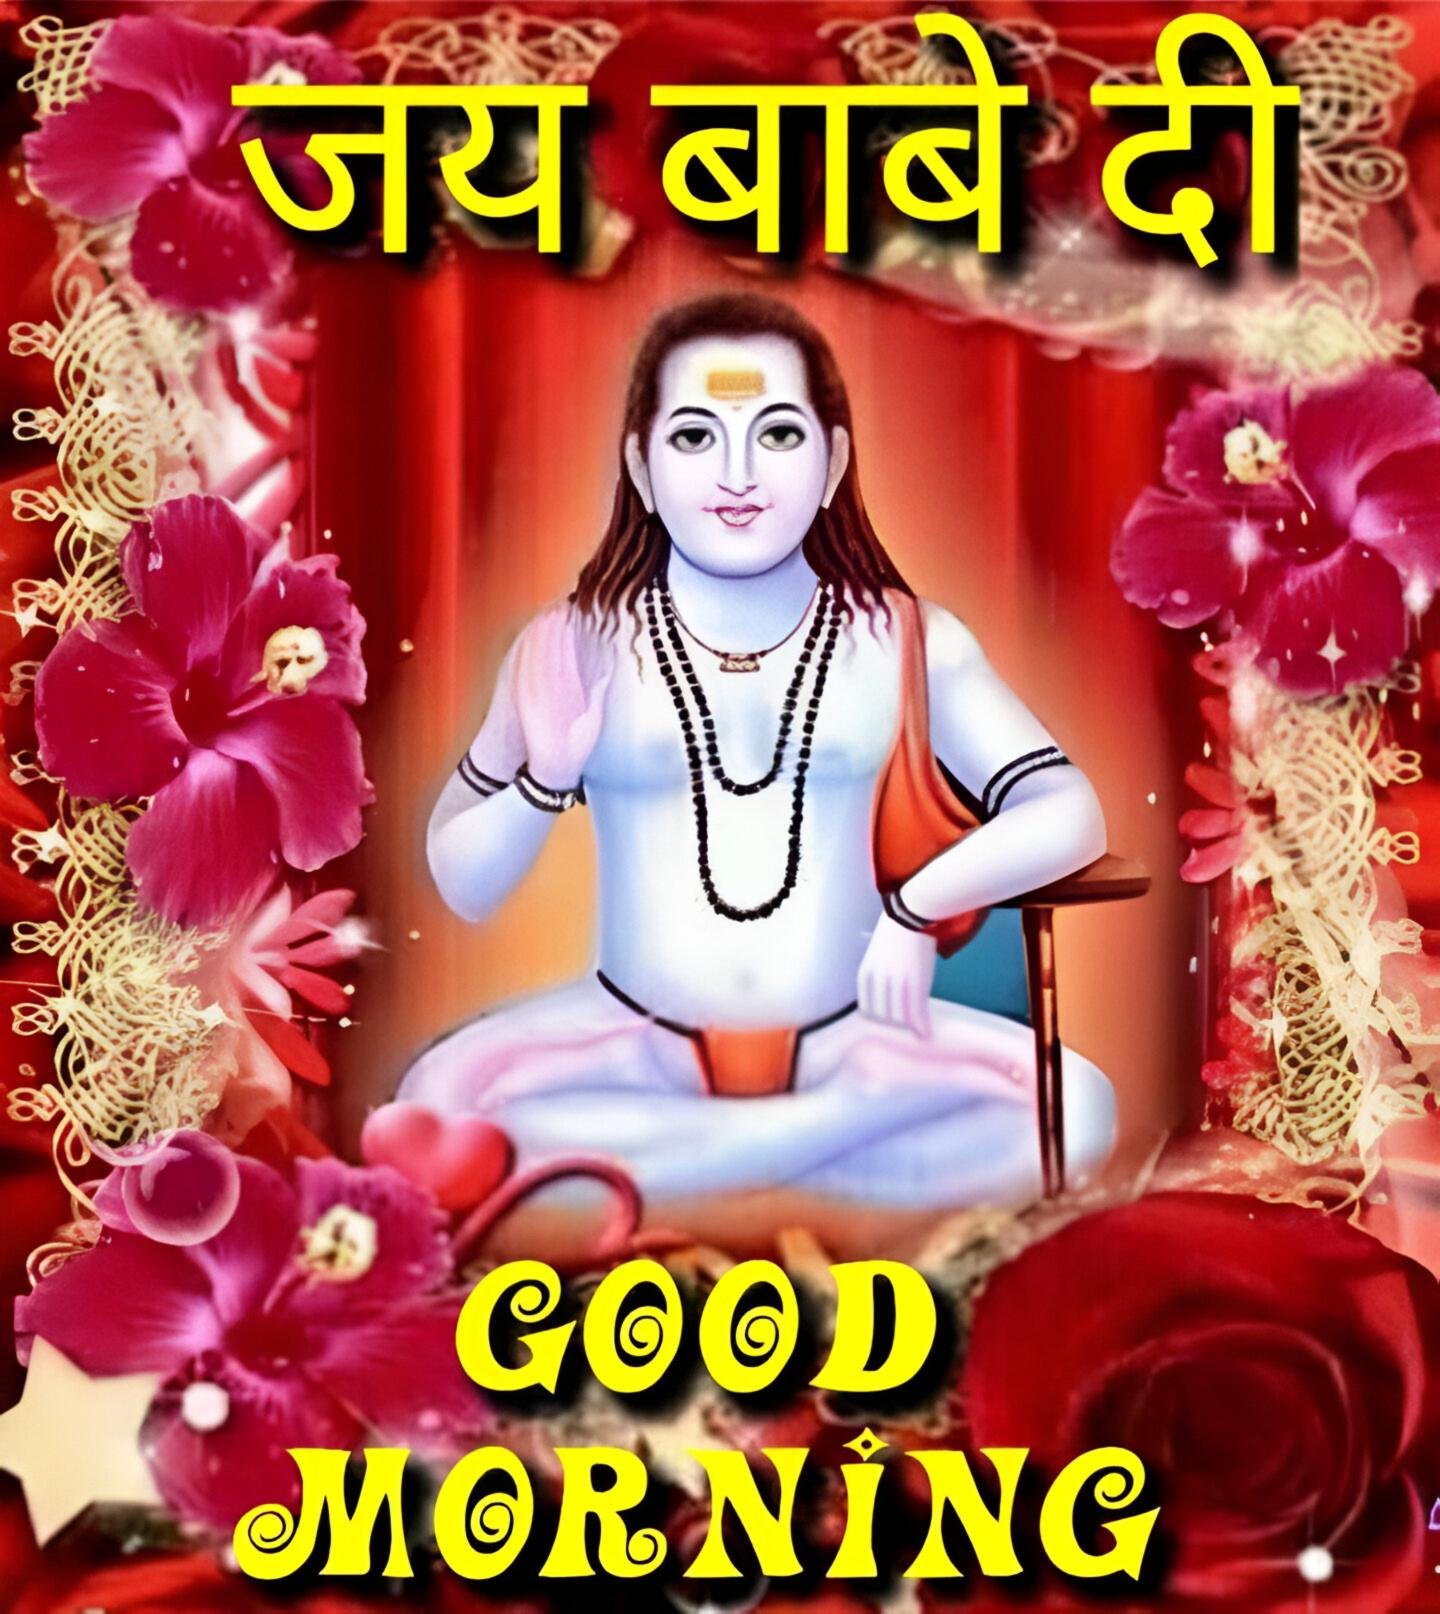 Wonderful Jai Baba Balak Nath Good Morning Image With Beautiful Flowers